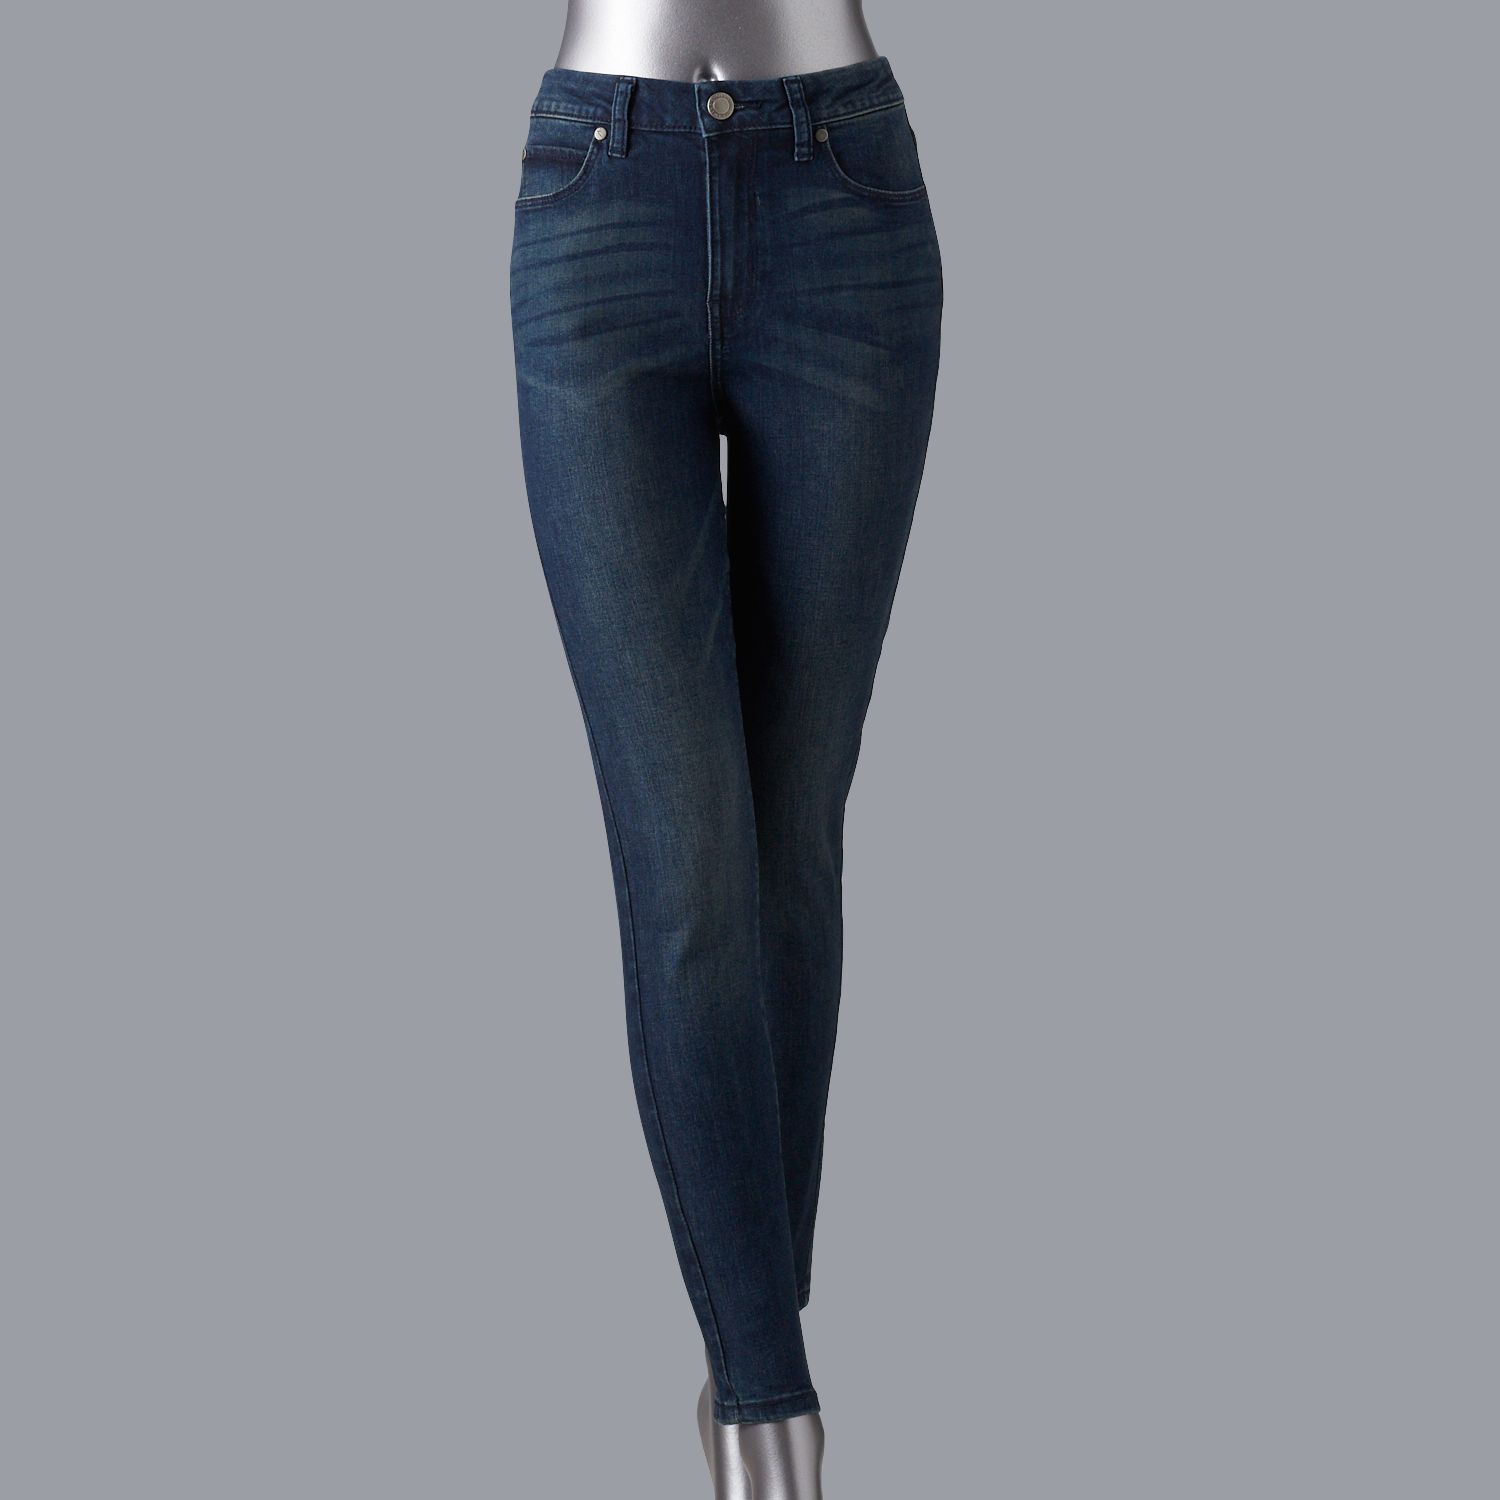 simply vera wang skinny jeans